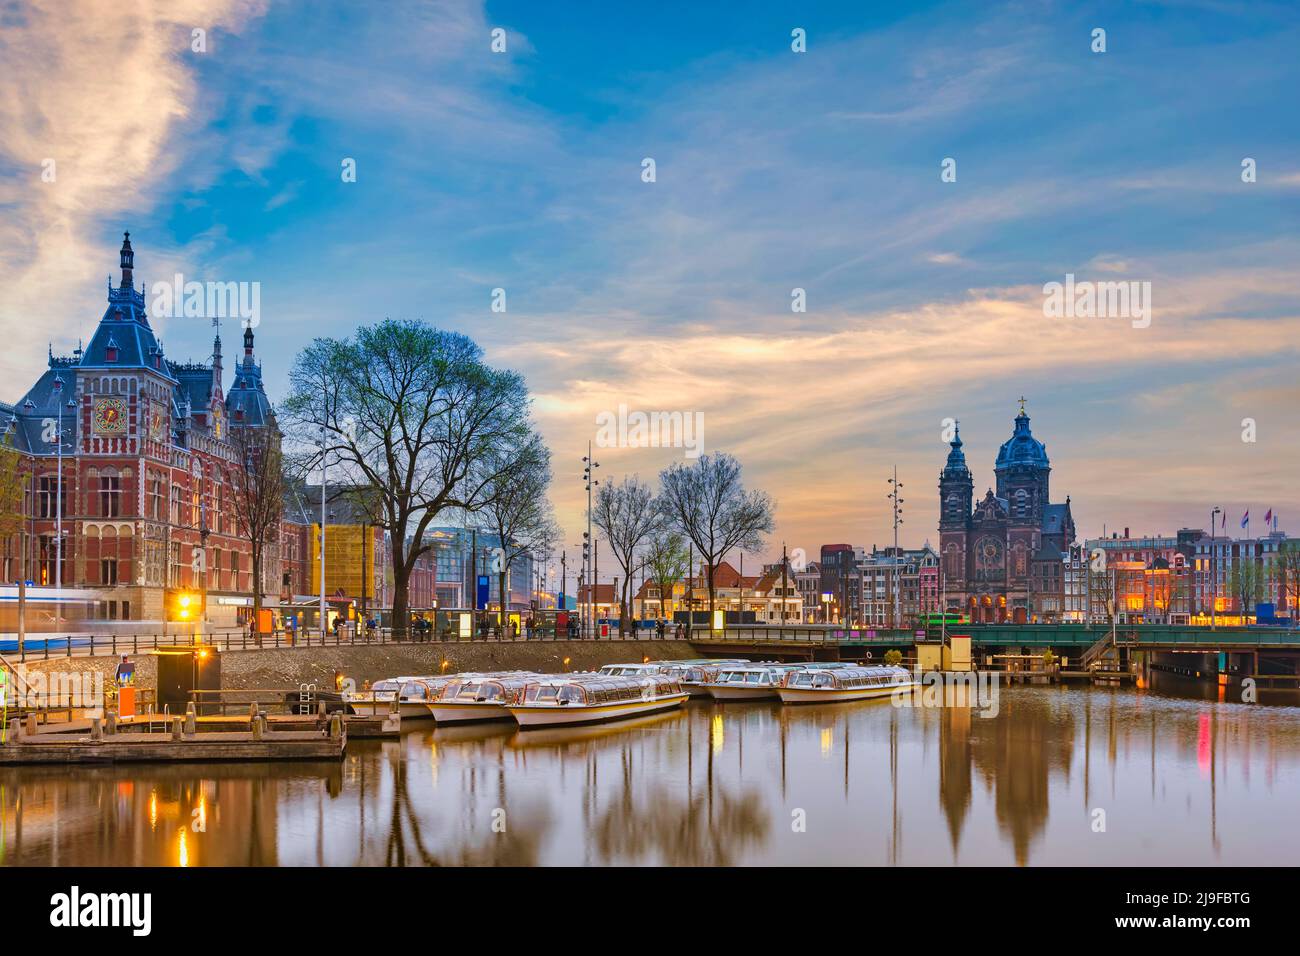 Amsterdam Netherlands, night city skyline at Amsterdam Central Station and Basilica of Saint Nicholas Stock Photo